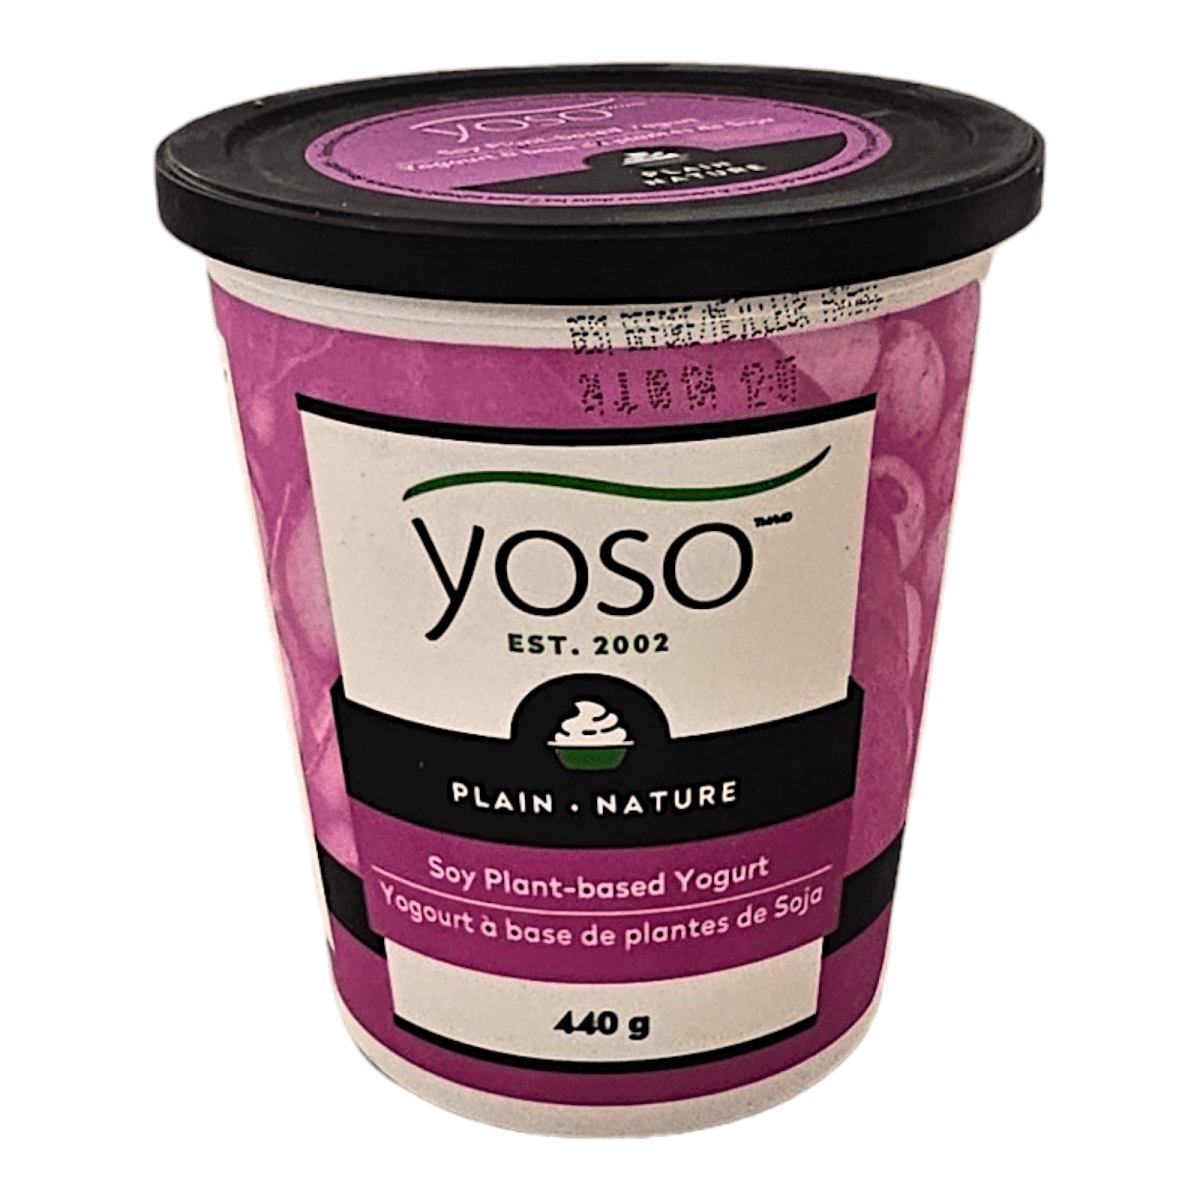 Yoso Soy Plant Based Yogurt Plain